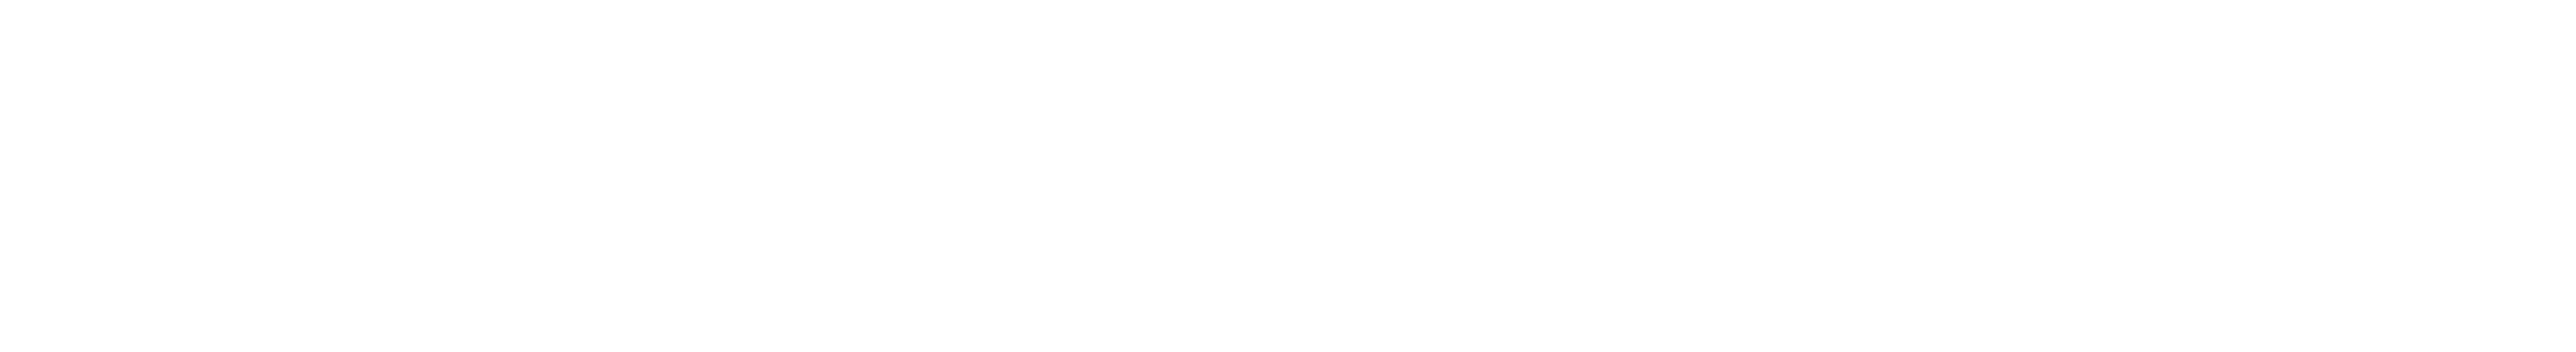 portugal2020 